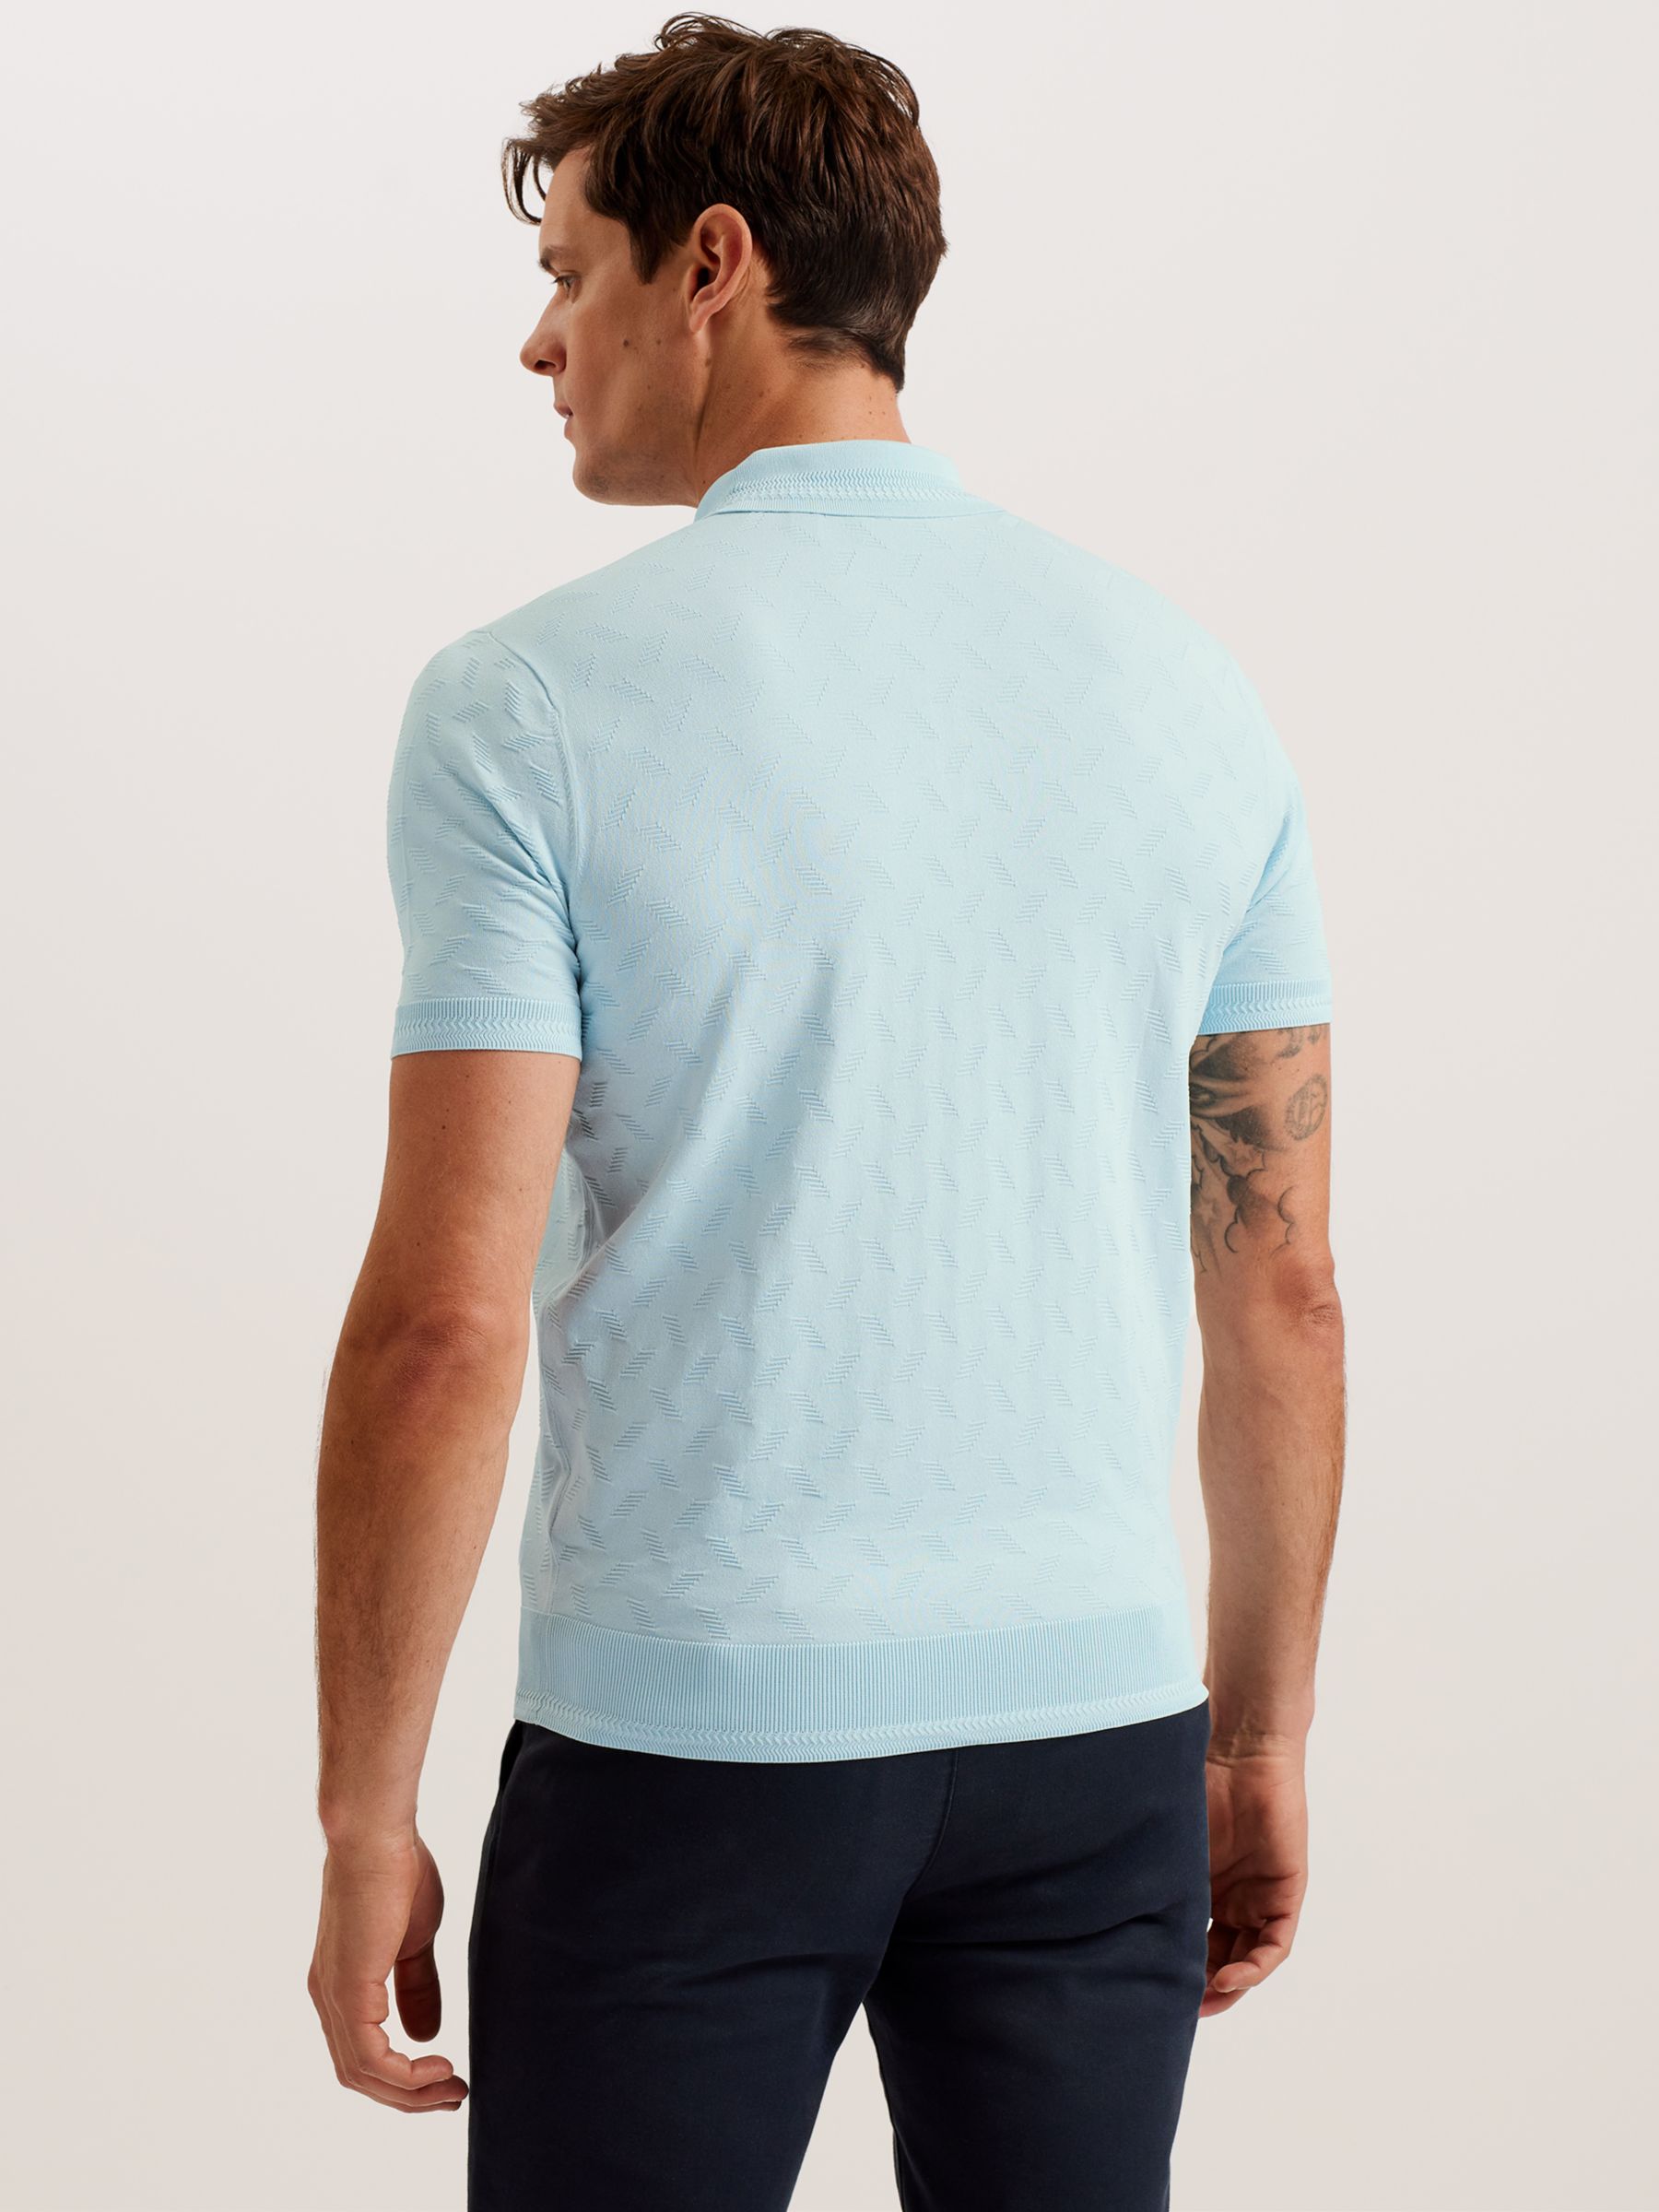 Ted Baker Palton Textured Zipped Polo Shirt, Light Blue, M